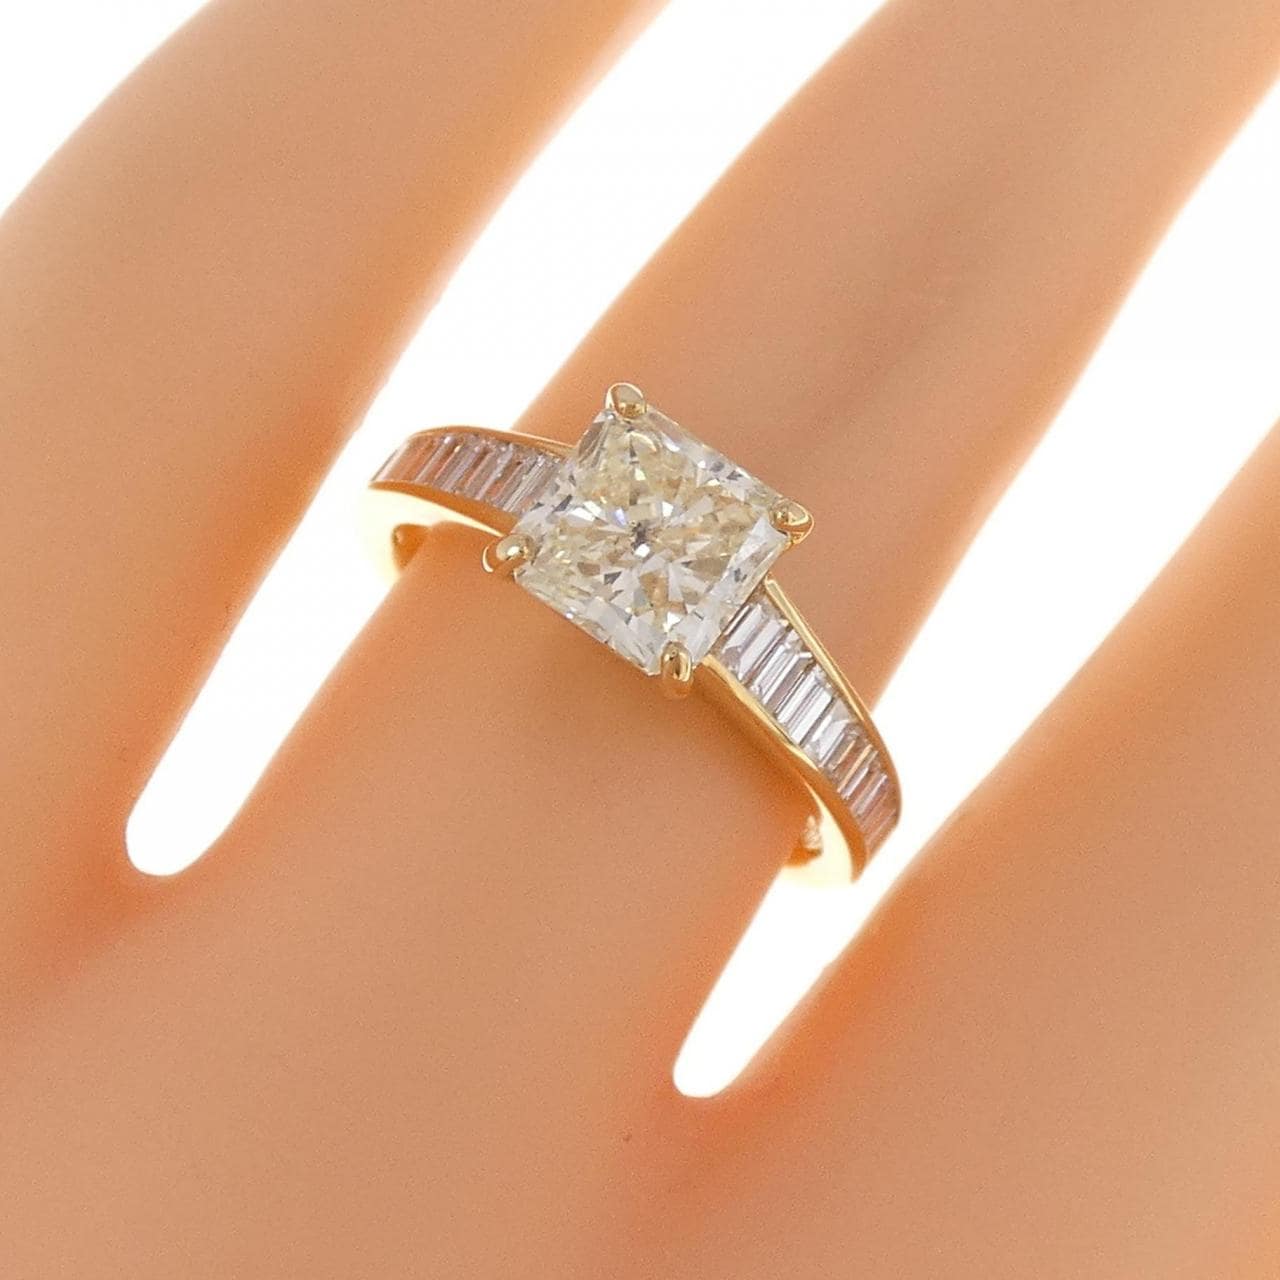 [Remake] K18YG Diamond Ring 1.521CT VLY SI2 Fancy Cut